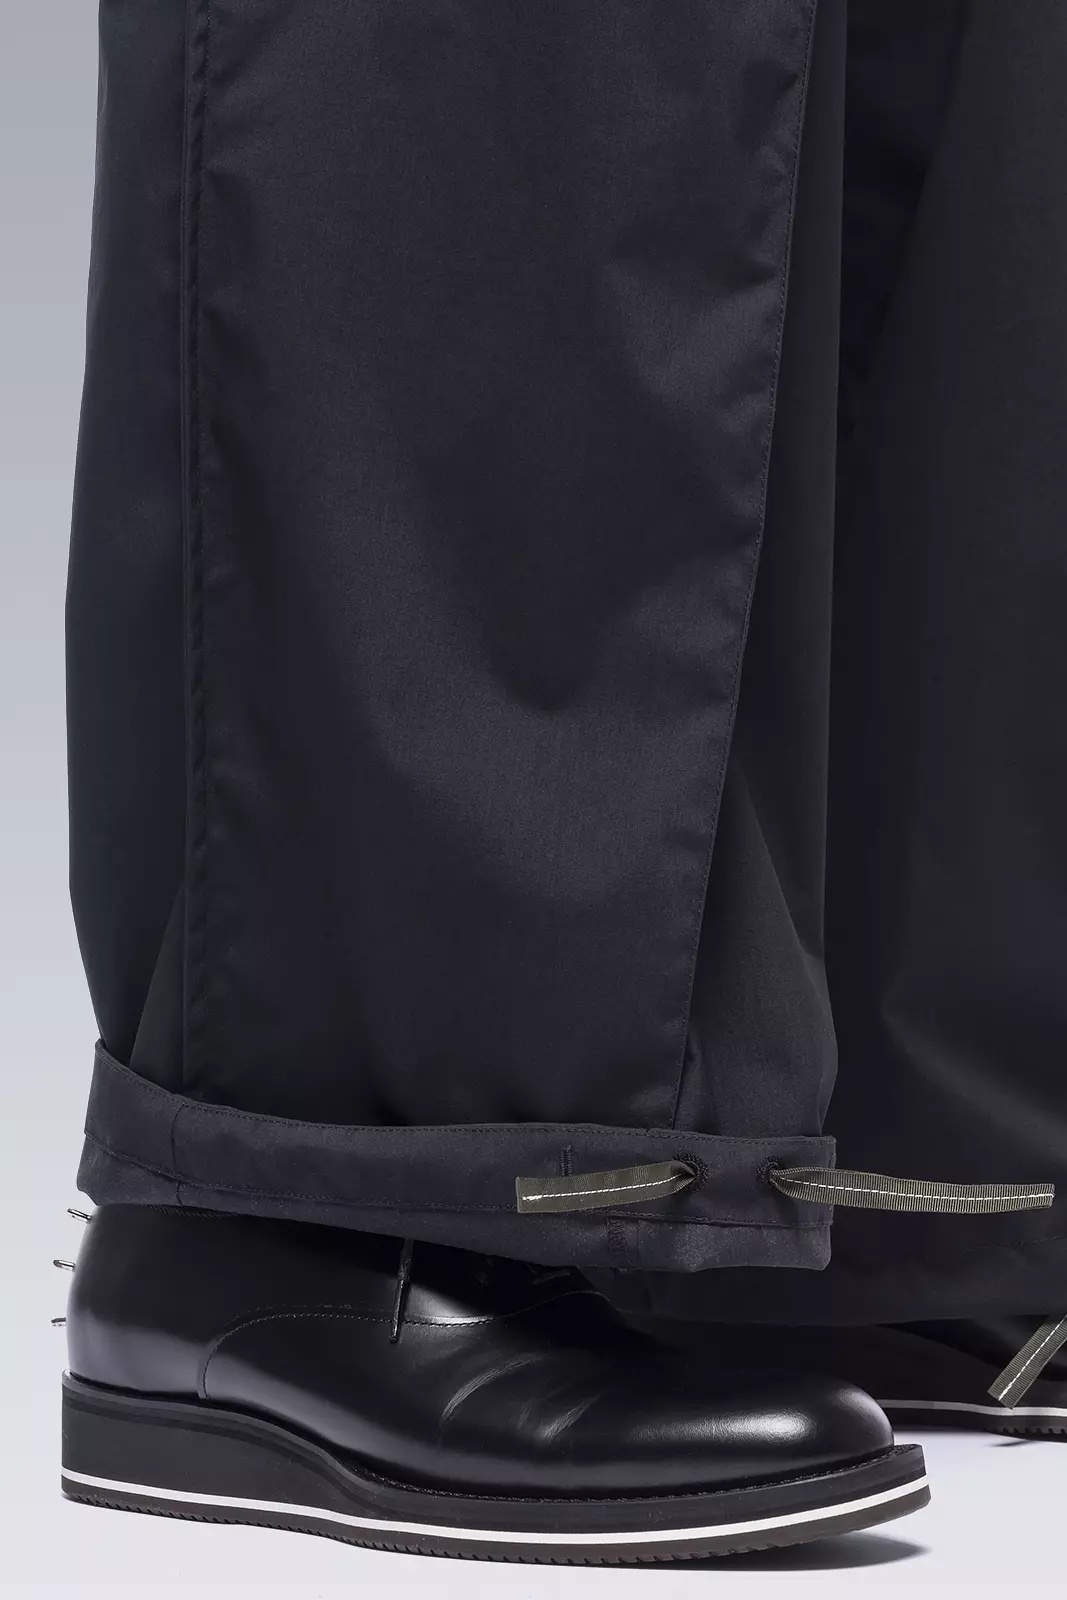 P45A-E Encapsulated Nylon Single Pleat Cargo Trouser Black - 31